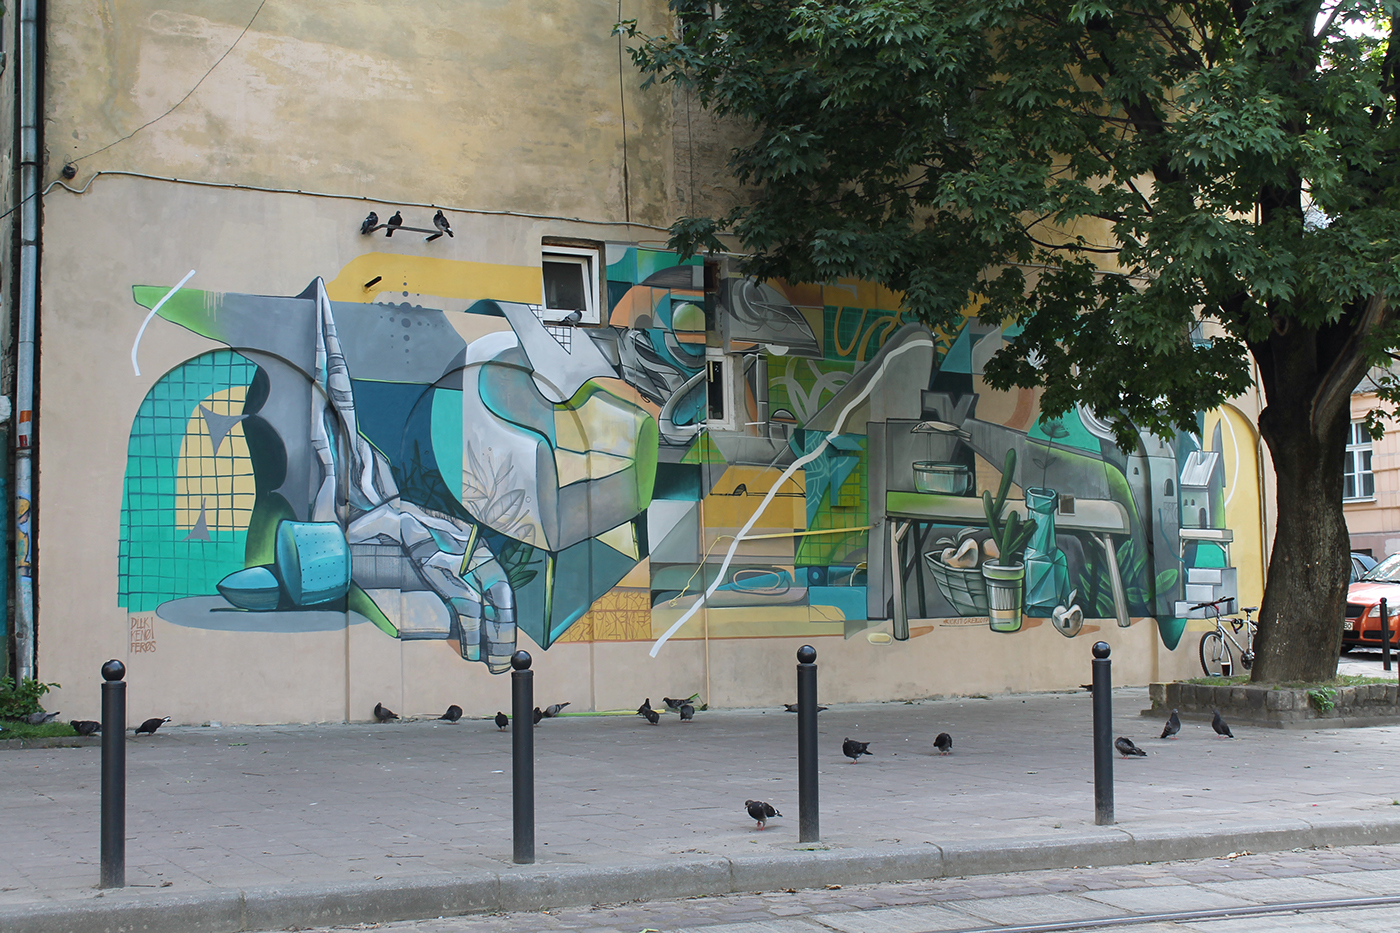 dilk FEROS KENO kickit kickit art studio tabu Street Art  Mural Graffiti painting  